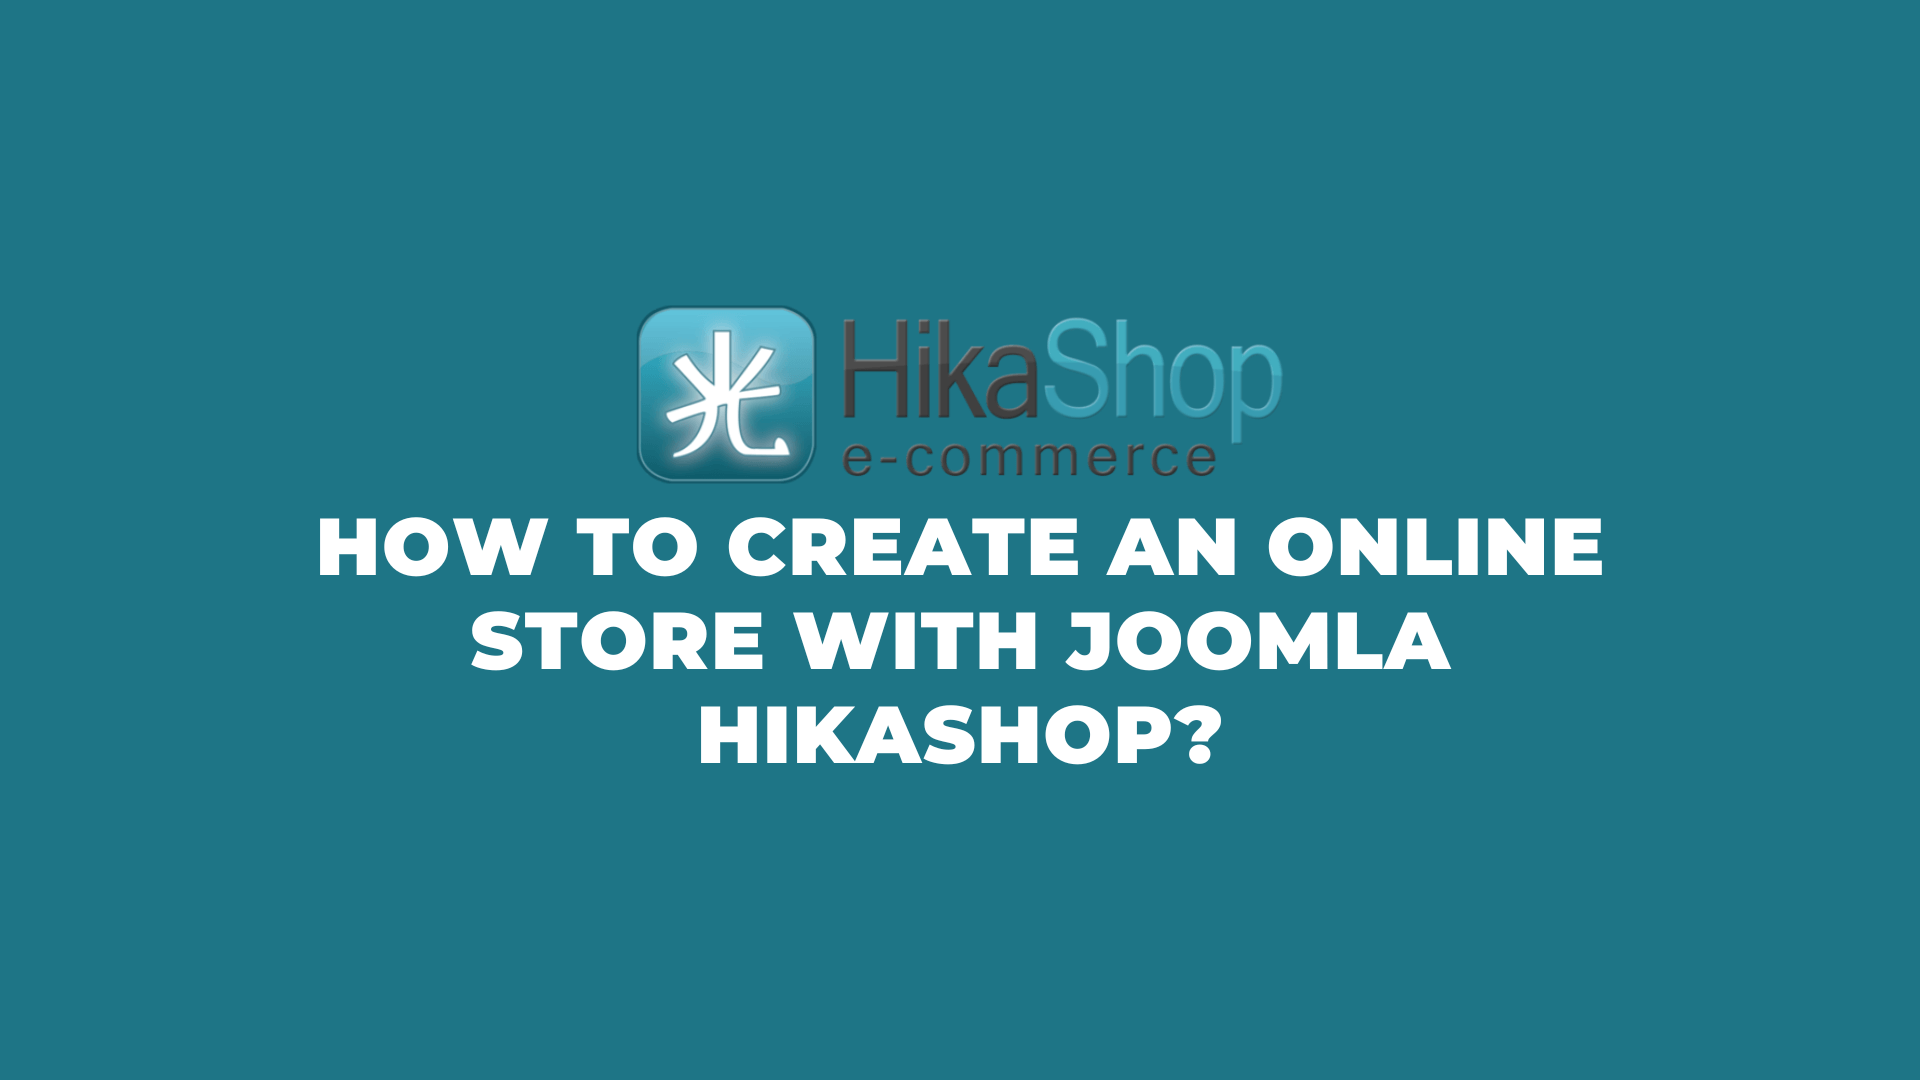 ordasoft Joomla News: How To Build An Online Shop With Hikashop